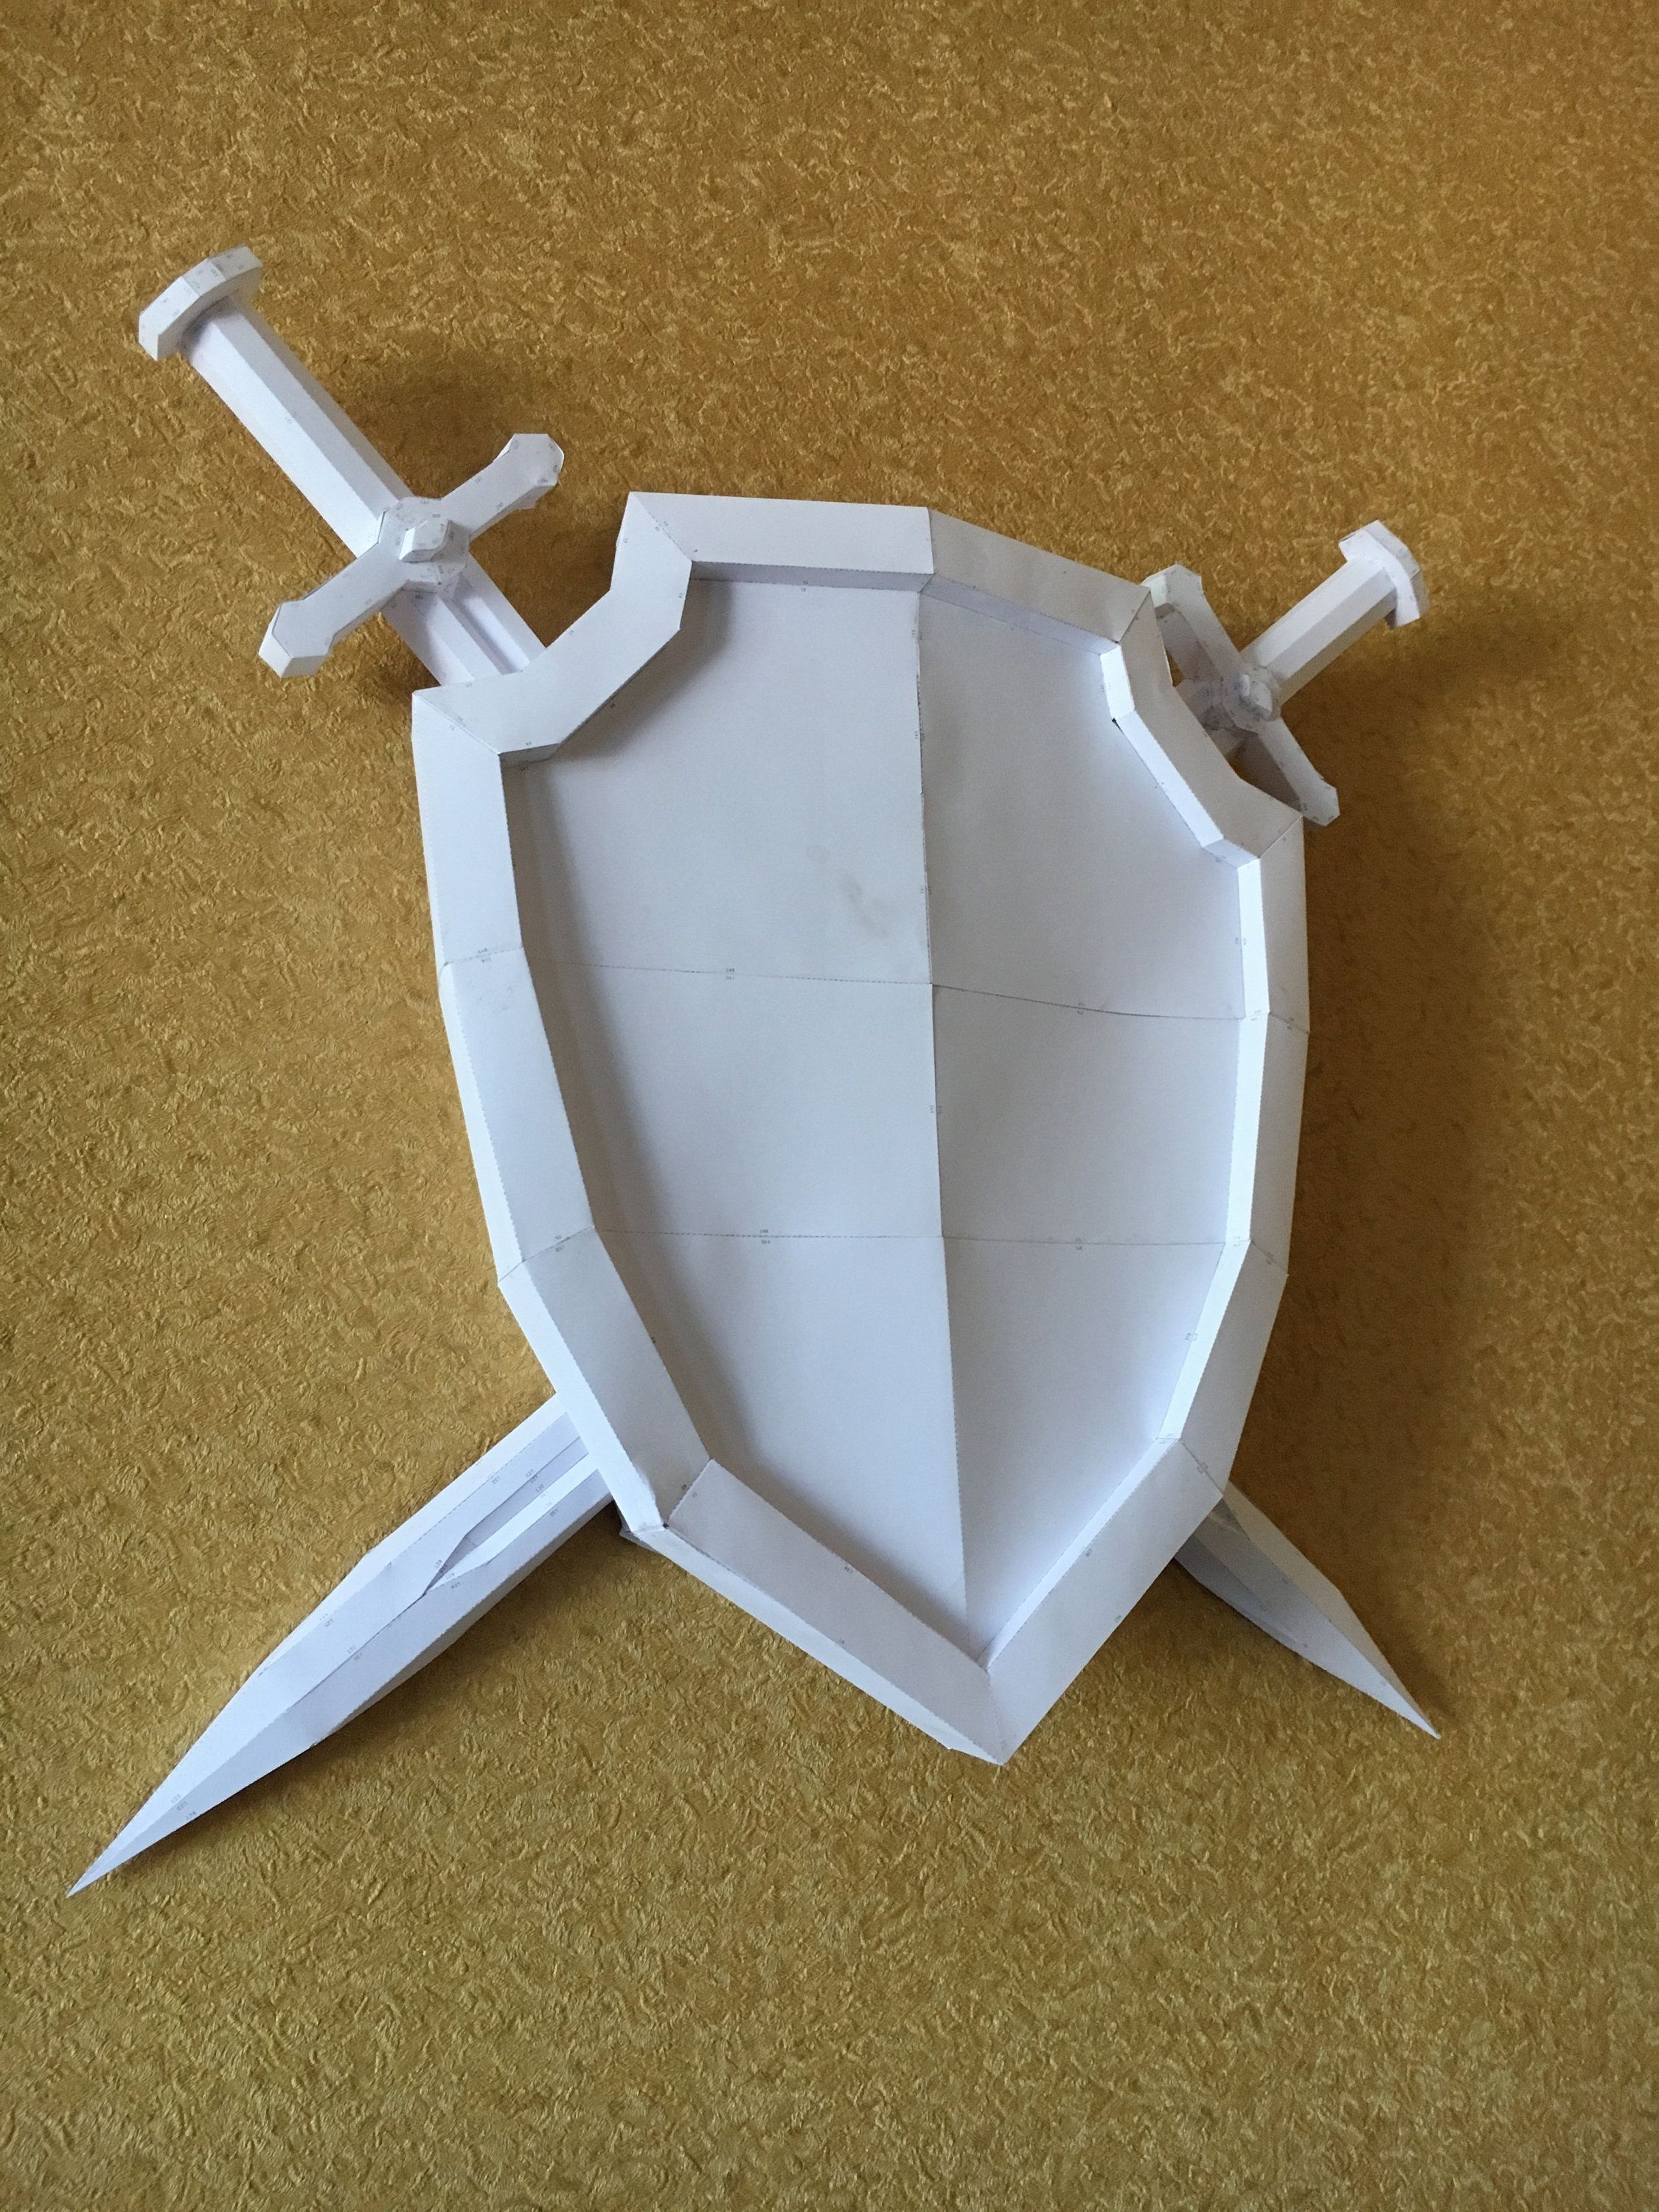 Fantasy Papercraft Sword Shield Diy Papercraft Model ÐÑÐ¼Ð°Ð¶Ð½ÑÐµ Ð¸Ð·Ð´ÐµÐ Ð¸Ñ